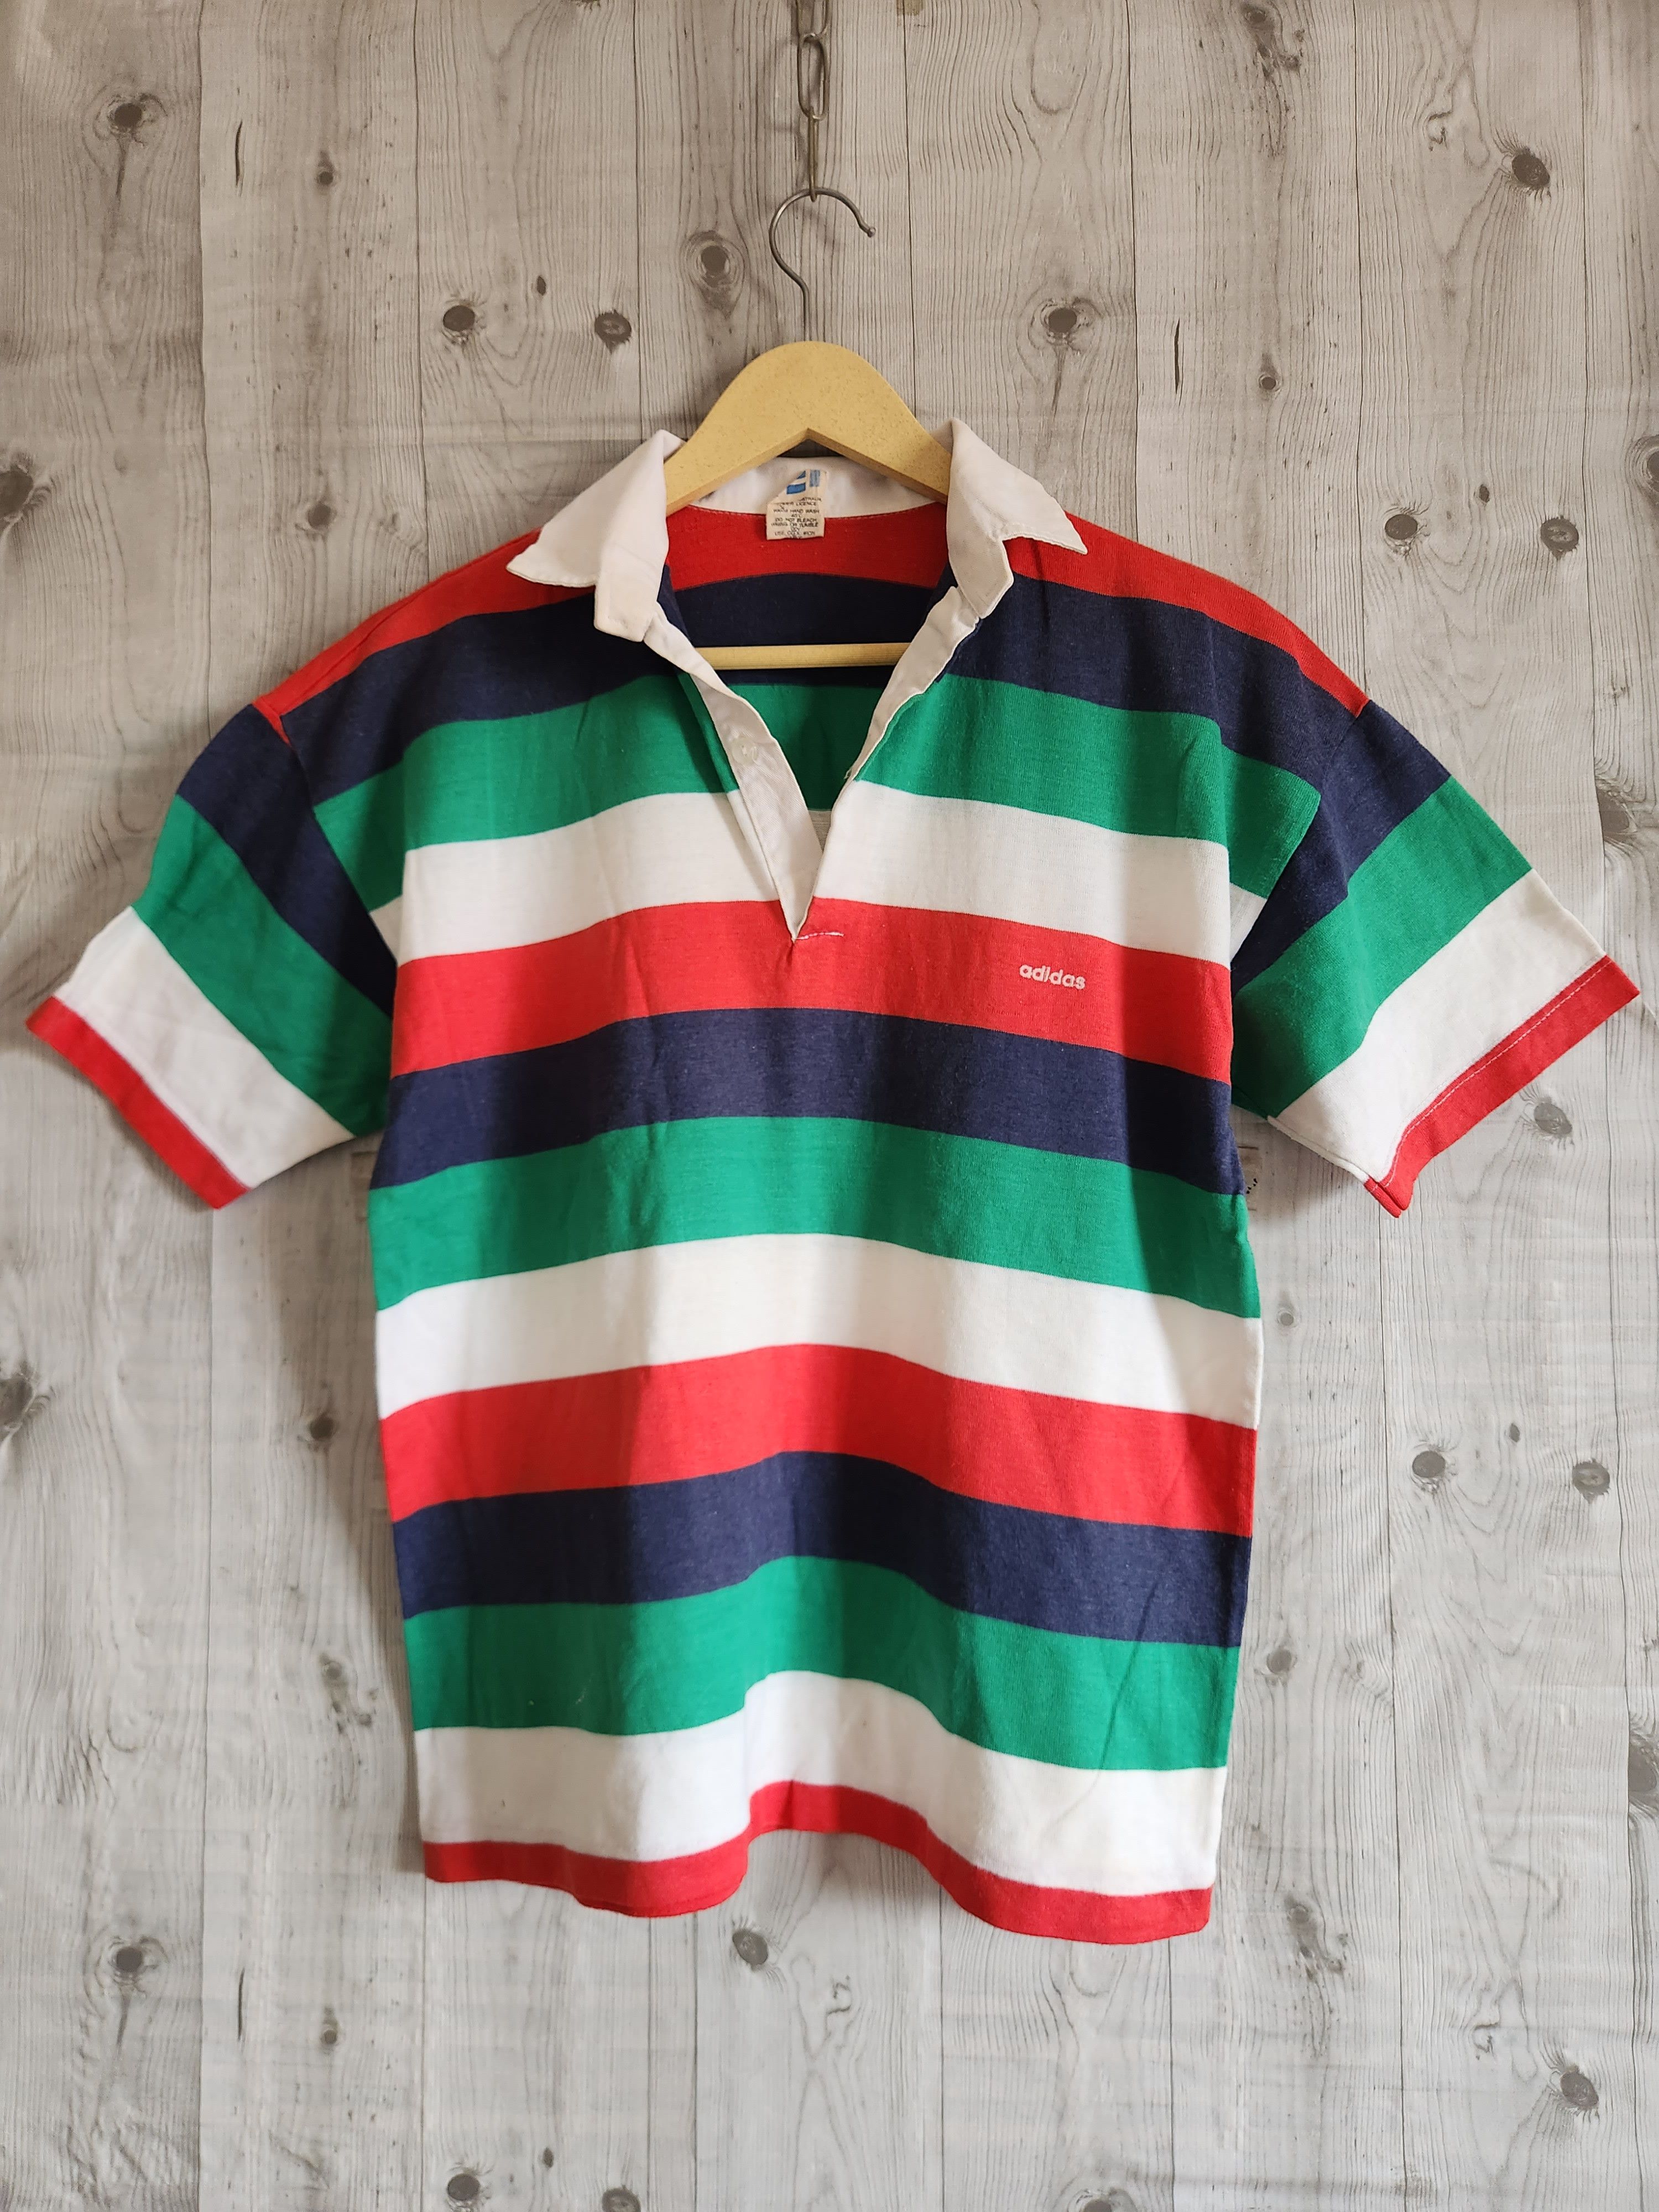 Vintage 1980s Adidas Trefoil Polo Shirt Polyester Cotton - 1